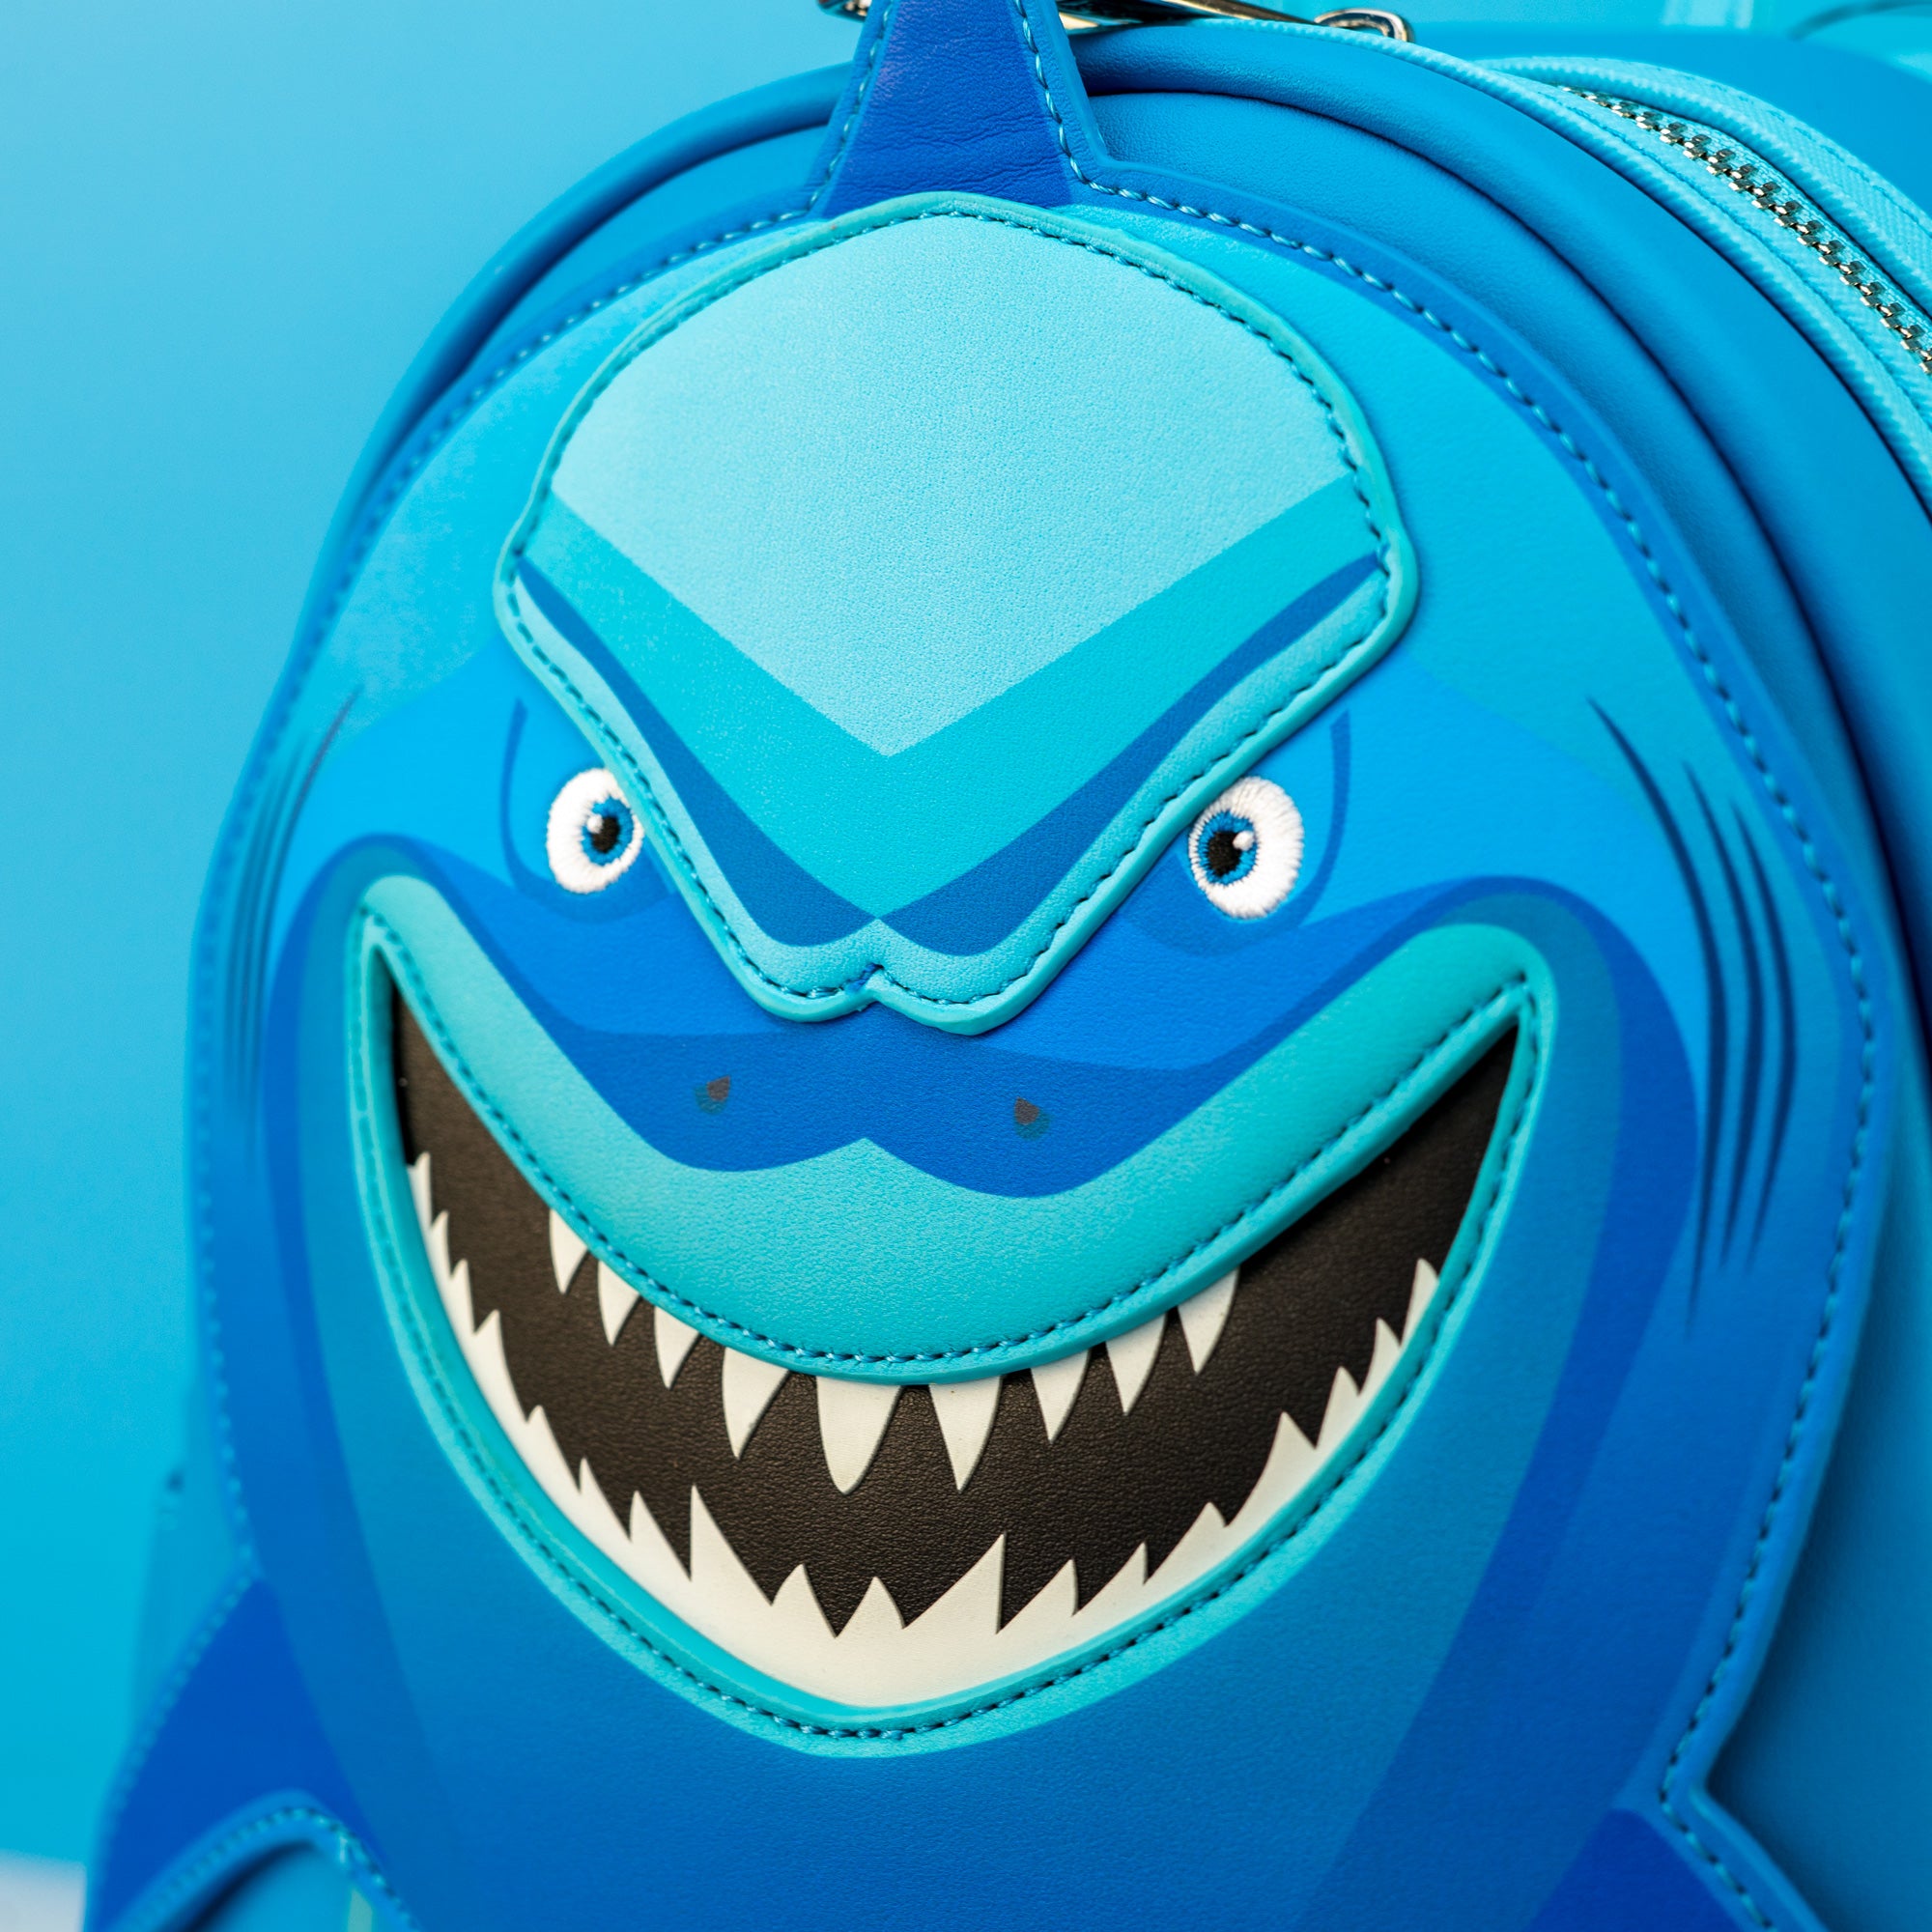 Loungefly x Pixar Finding Nemo Bruce Cosplay Mini Backpack